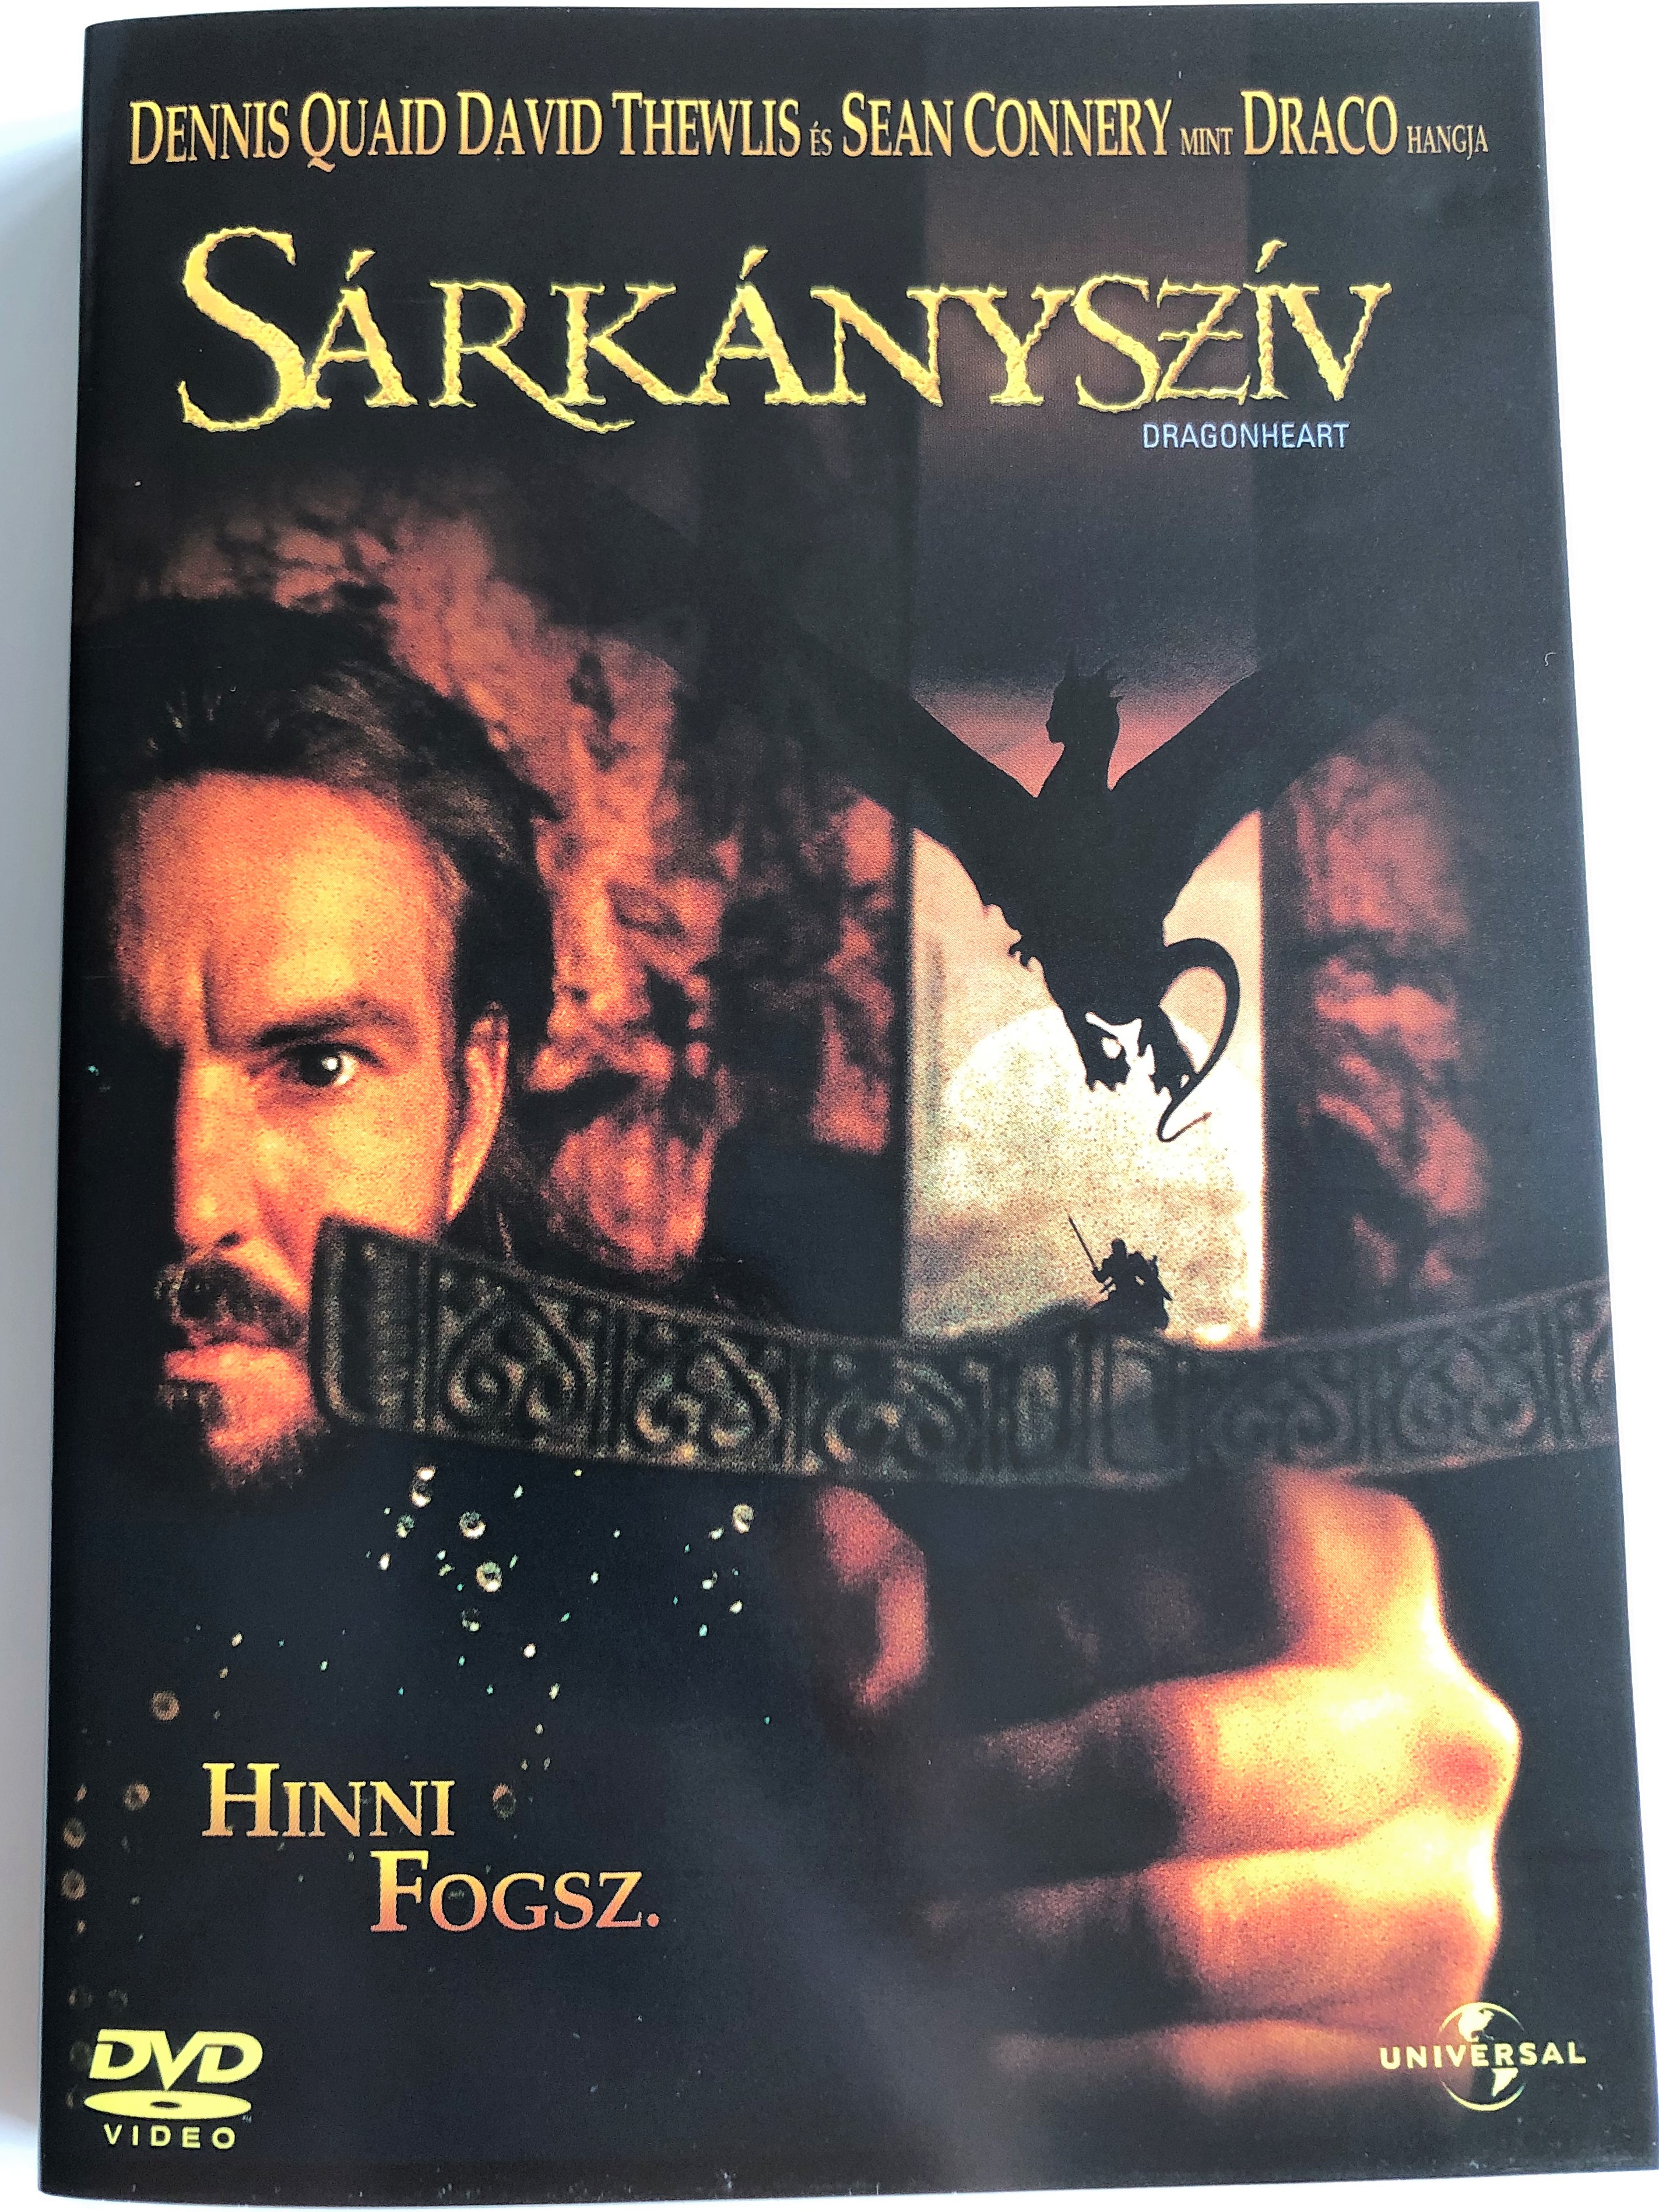 dragonheart-dvd-1996-s-rk-nysz-v-directed-by-rob-cohen-starring-dennis-quaid-david-thewlis-pete-postlethwaite-dina-meyer-julie-christie-sean-connery-1-.jpg